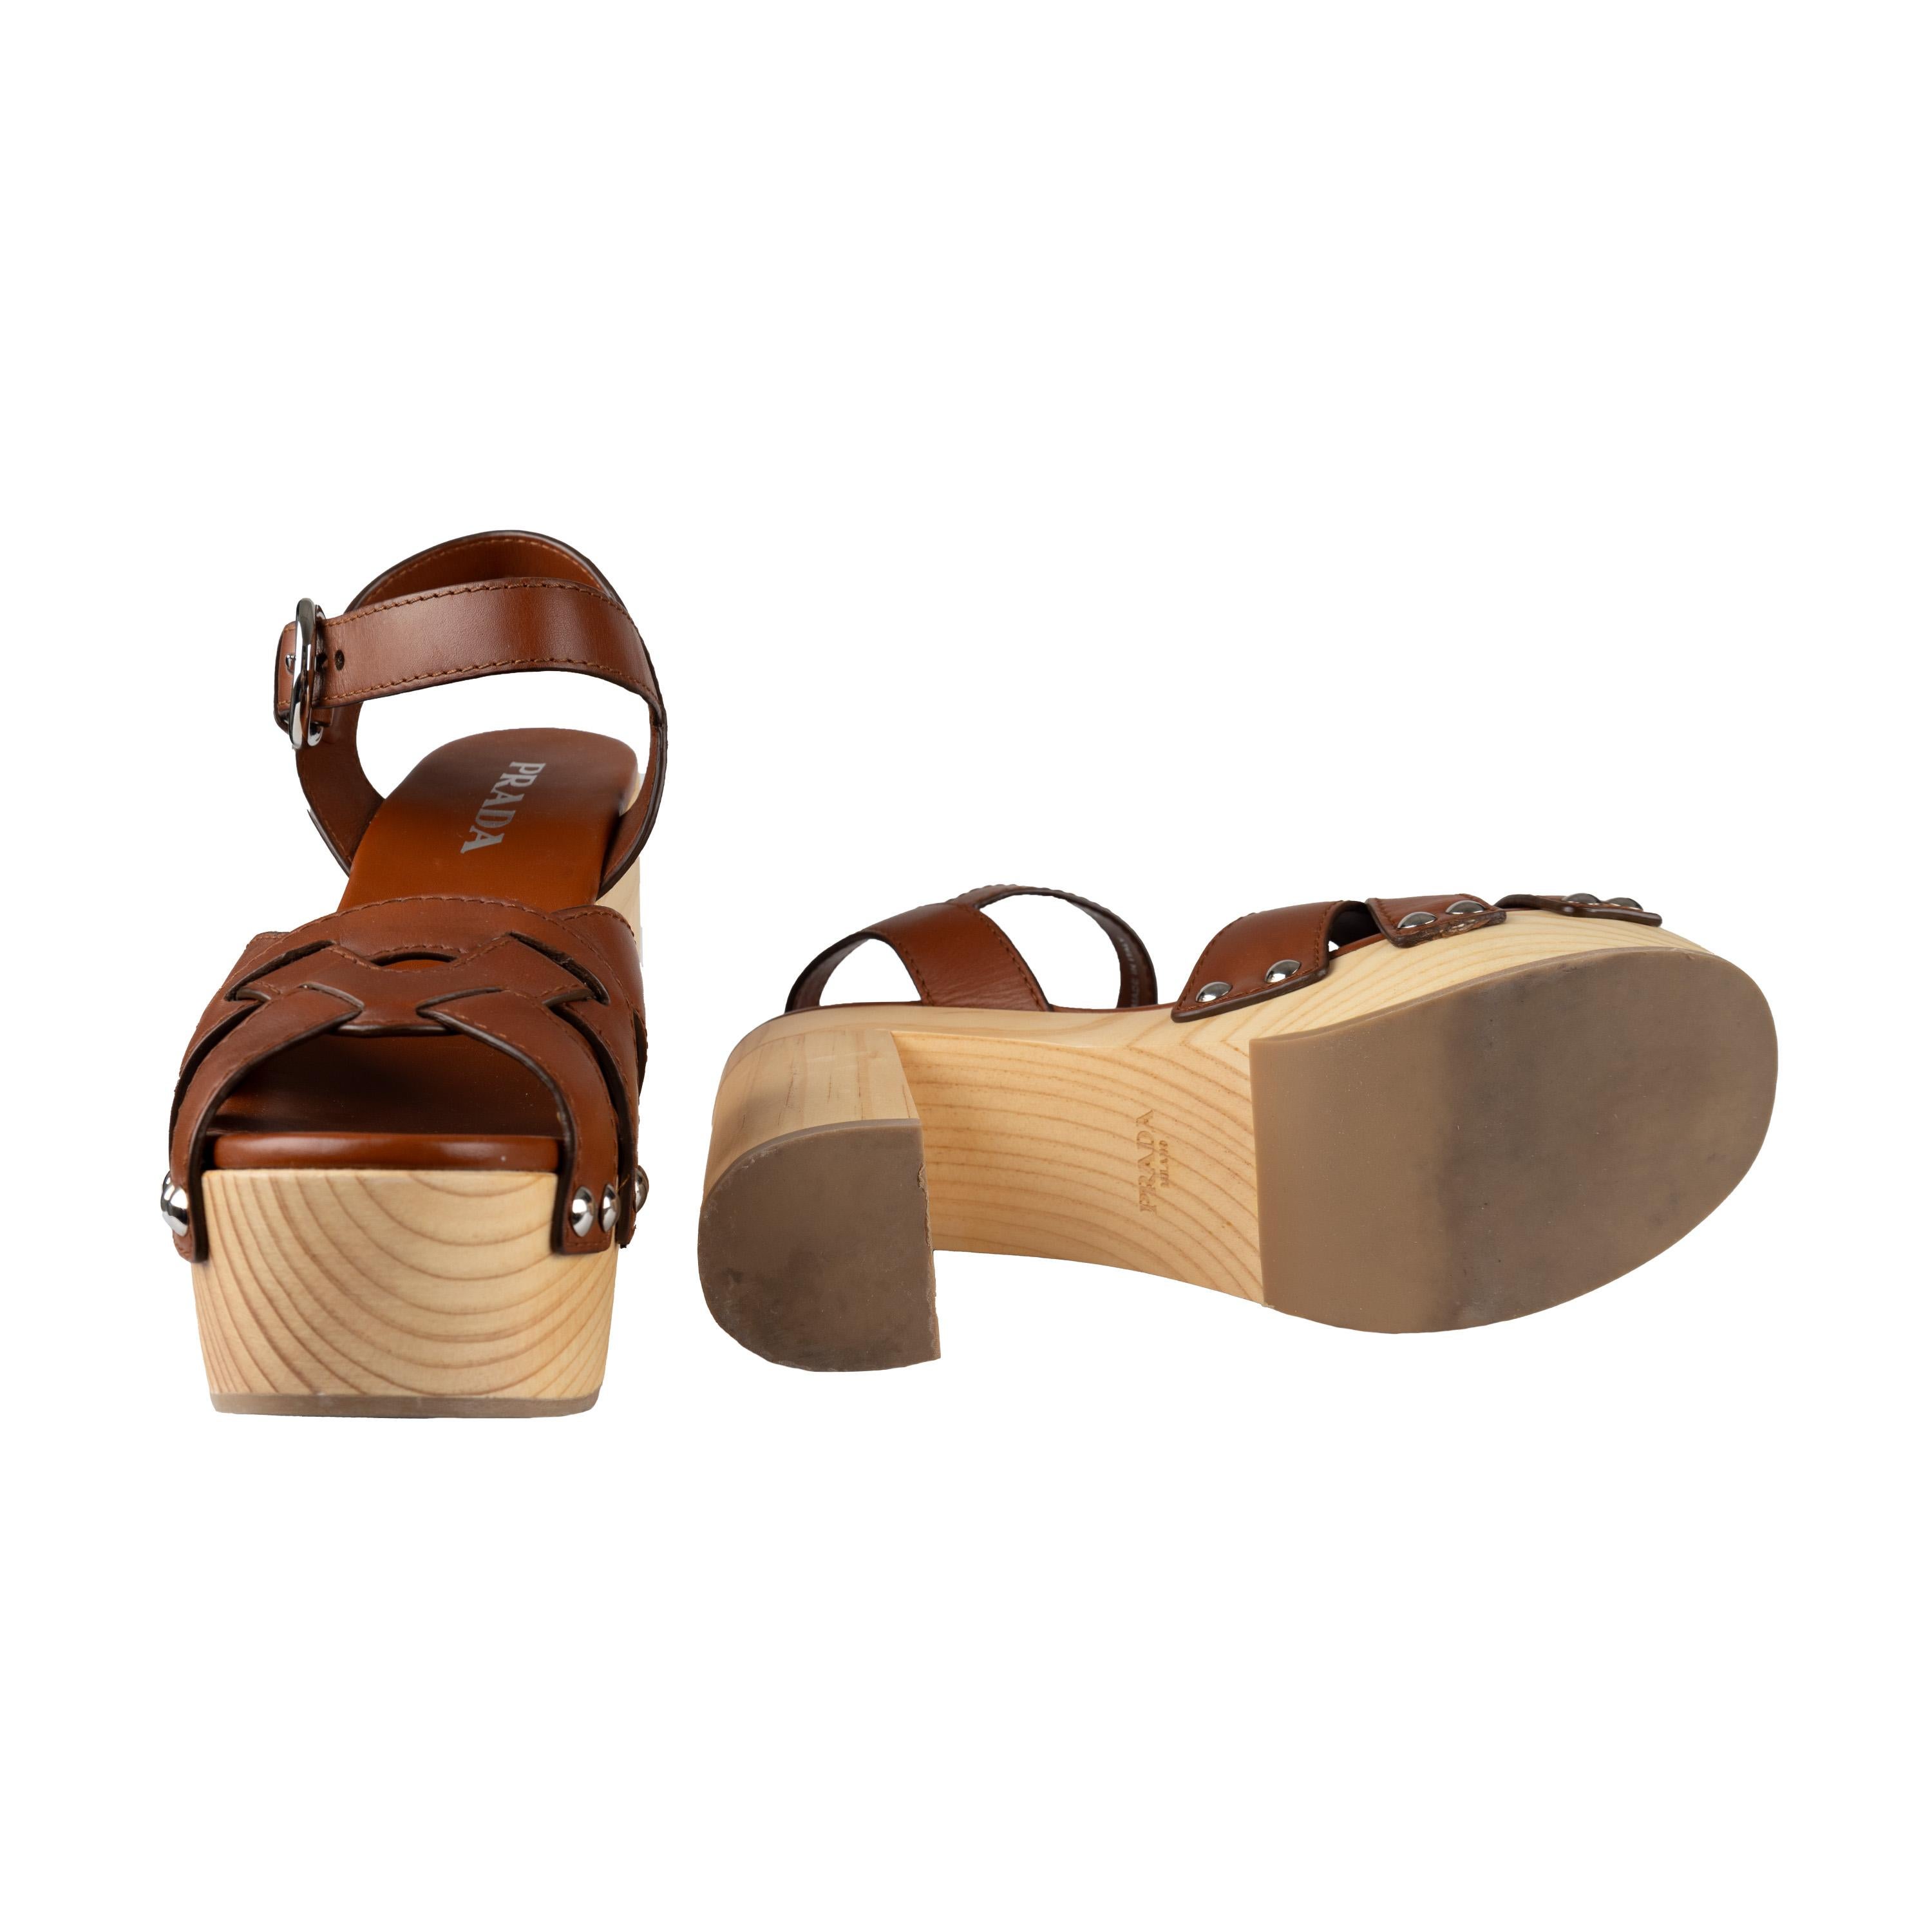 Prada Wooden Platform Sandals In Good Condition For Sale In Milano, IT